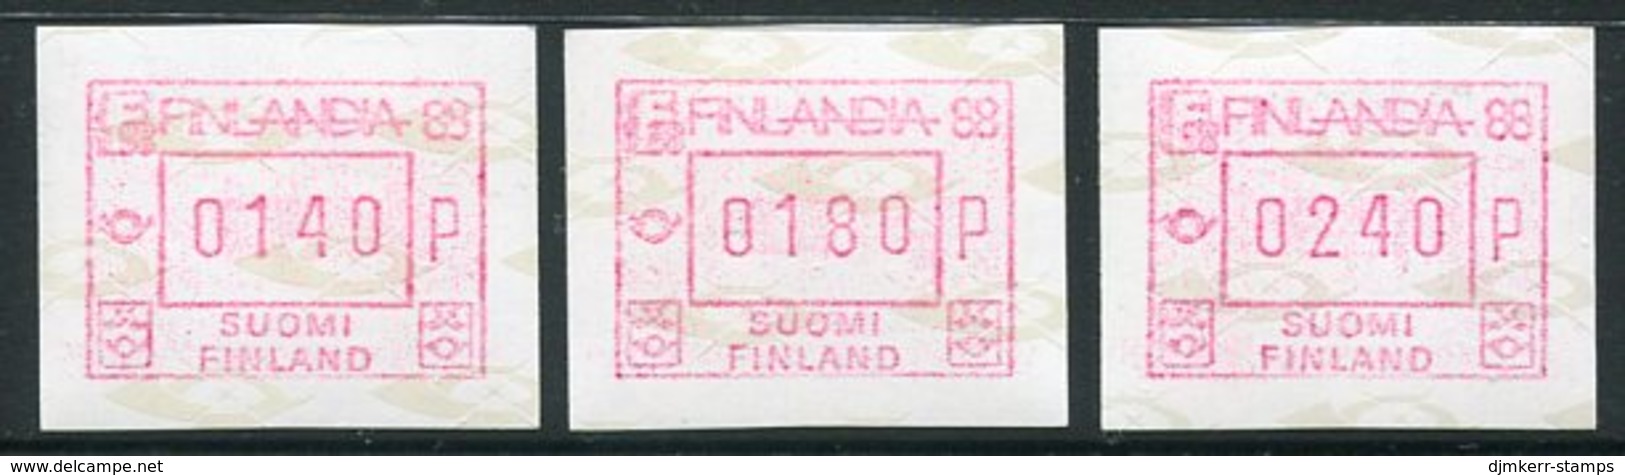 FINLAND 1986 FINLANDIA '88  ATM, Three Values MNH / **..  Michel 2 - Machine Labels [ATM]